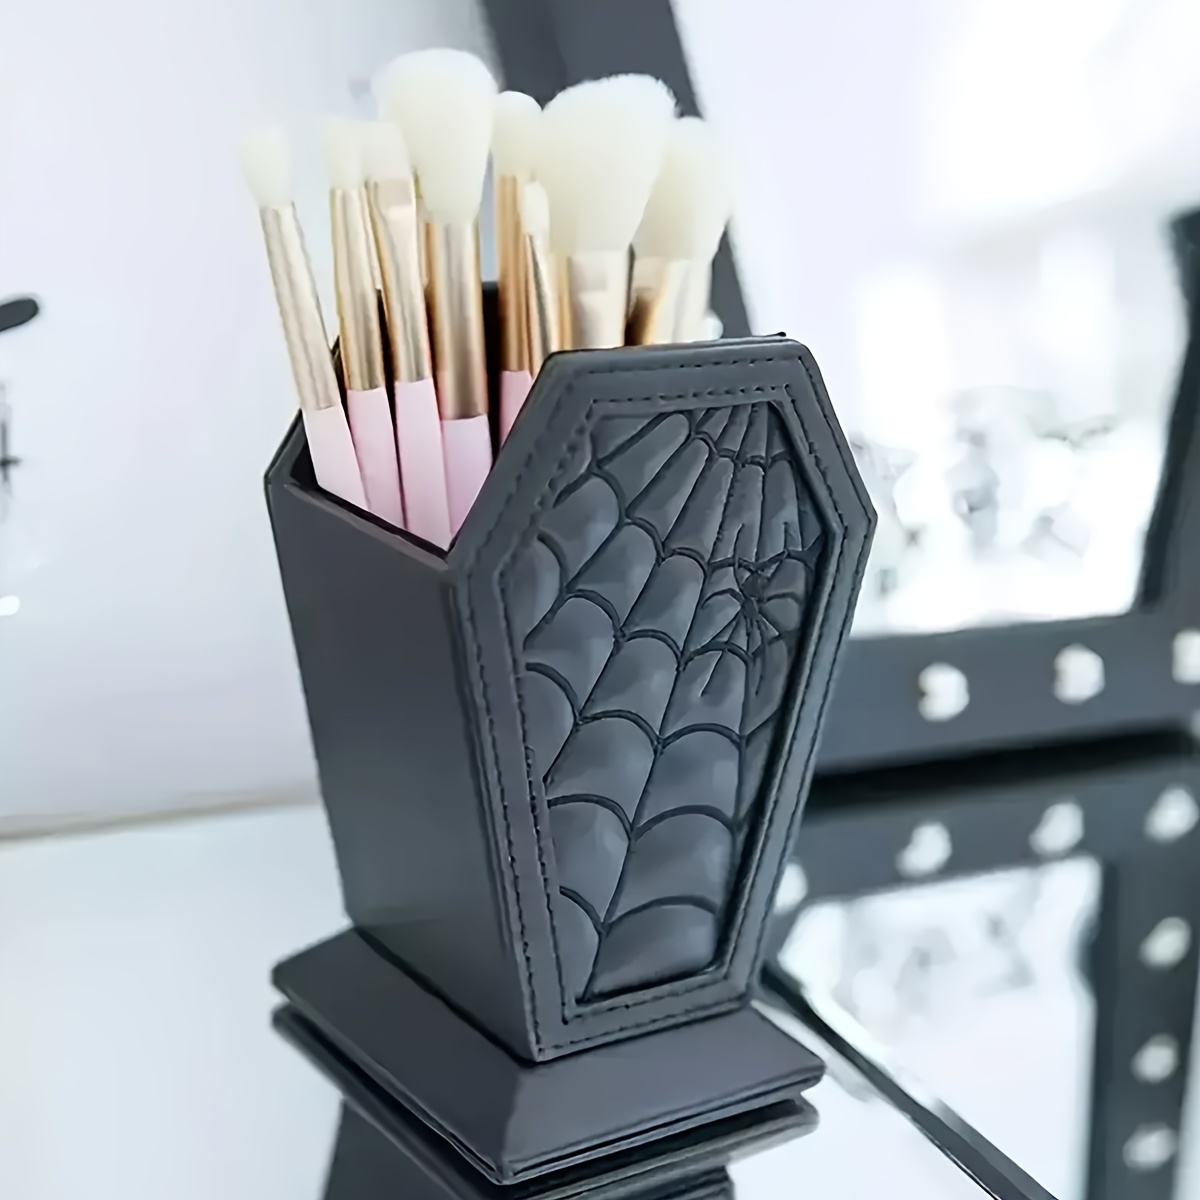 

Gothic Coffin-shaped Spider Web Makeup Brush Holder - Lightweight Plastic Desk Organizer For Vanity Or Office Decor